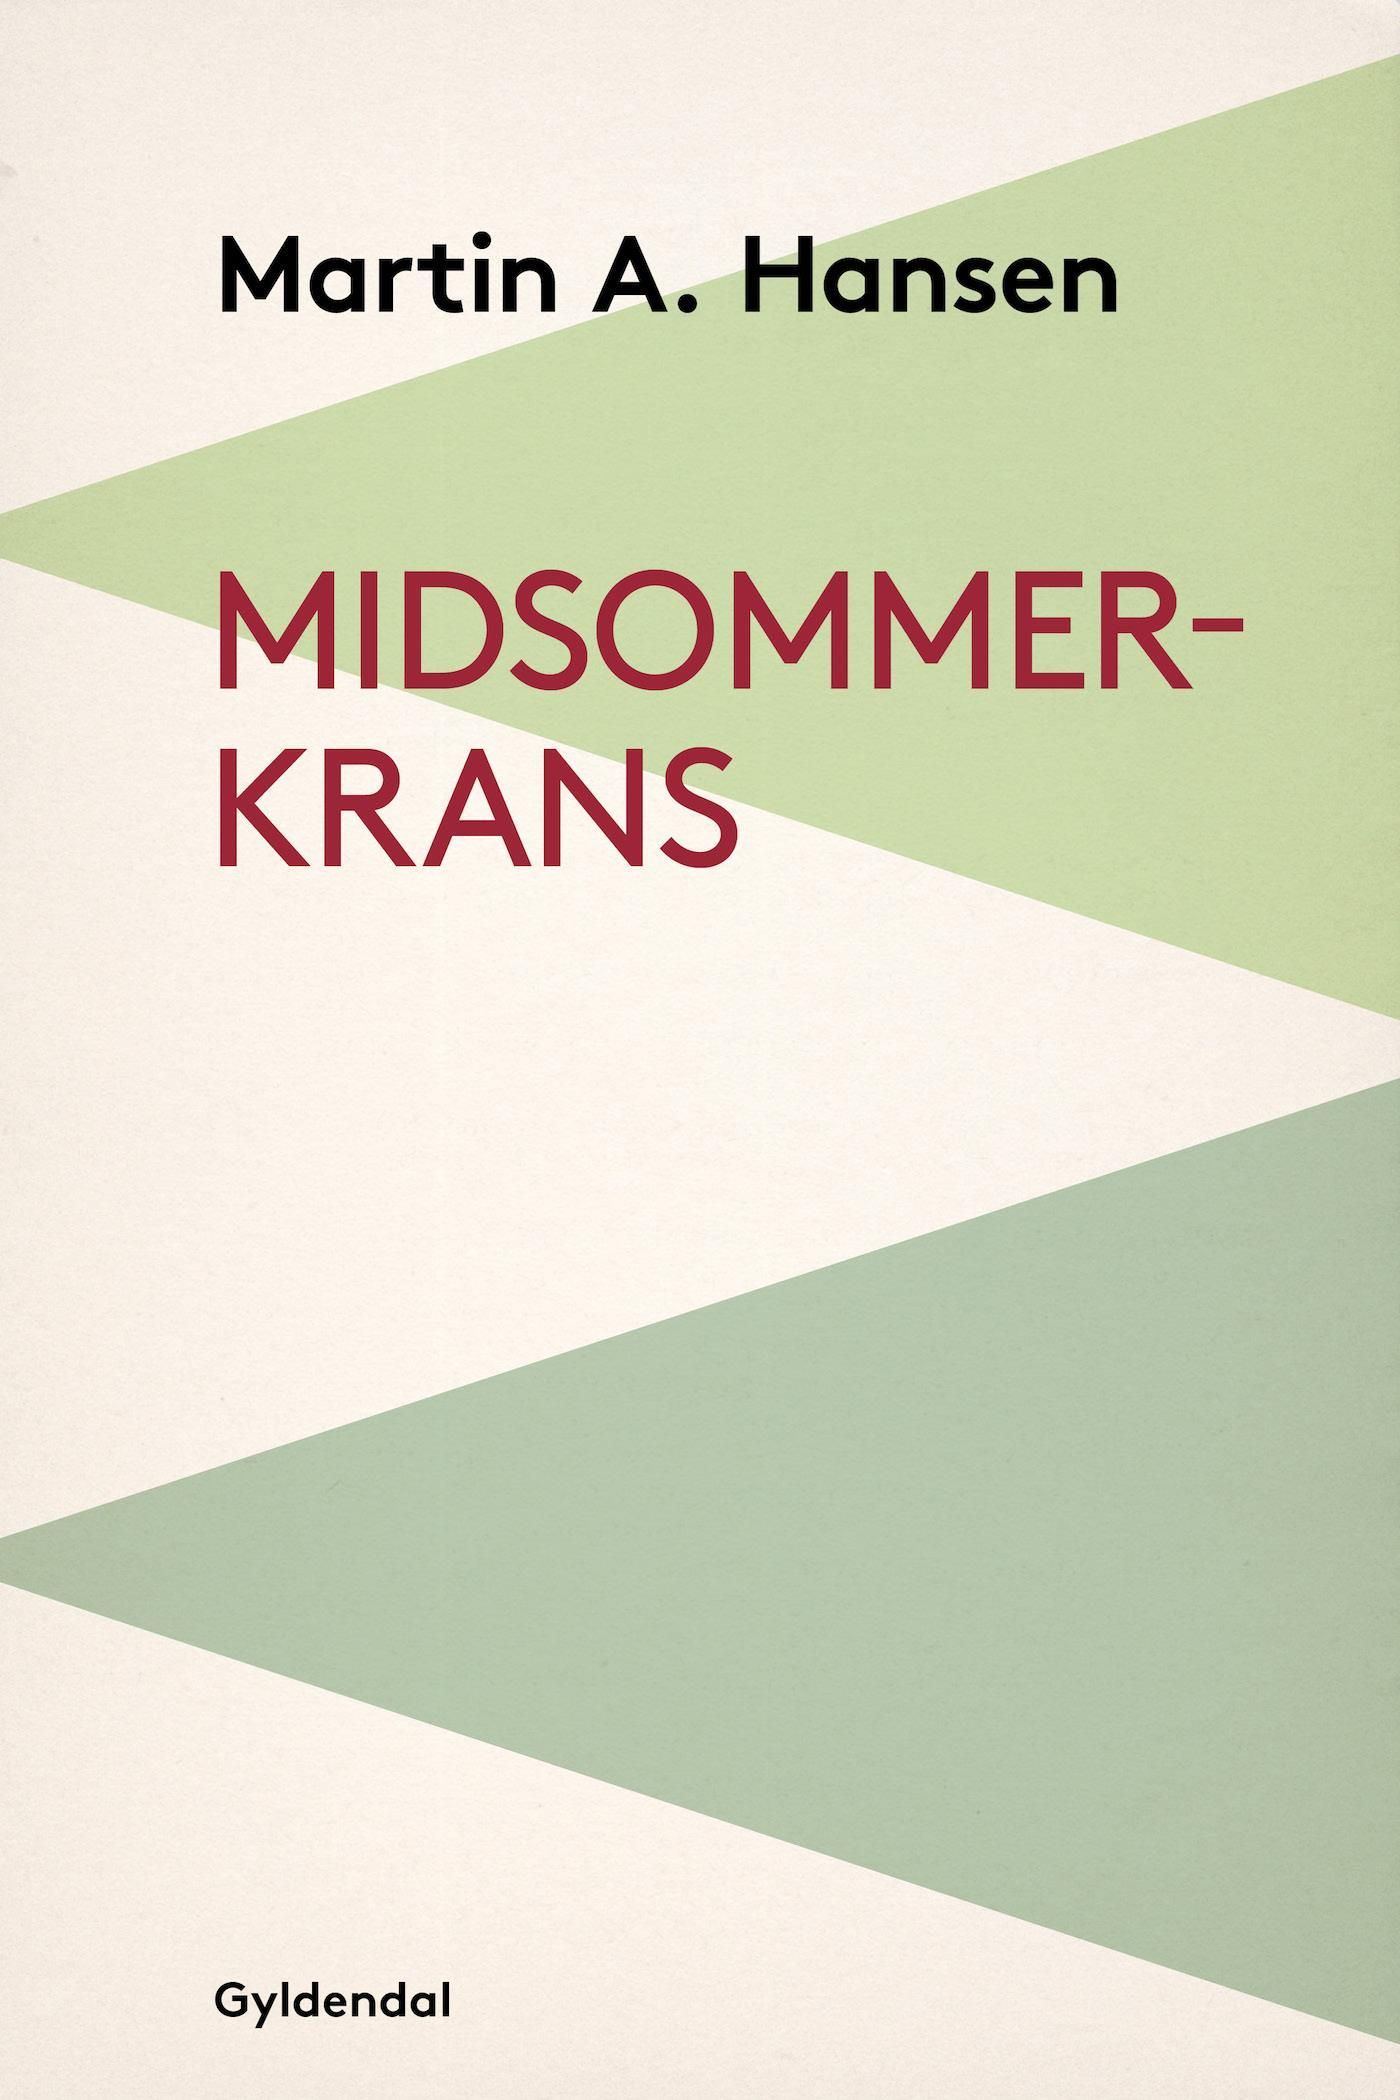 Midsommerkrans, eBook by Martin A. Hansen